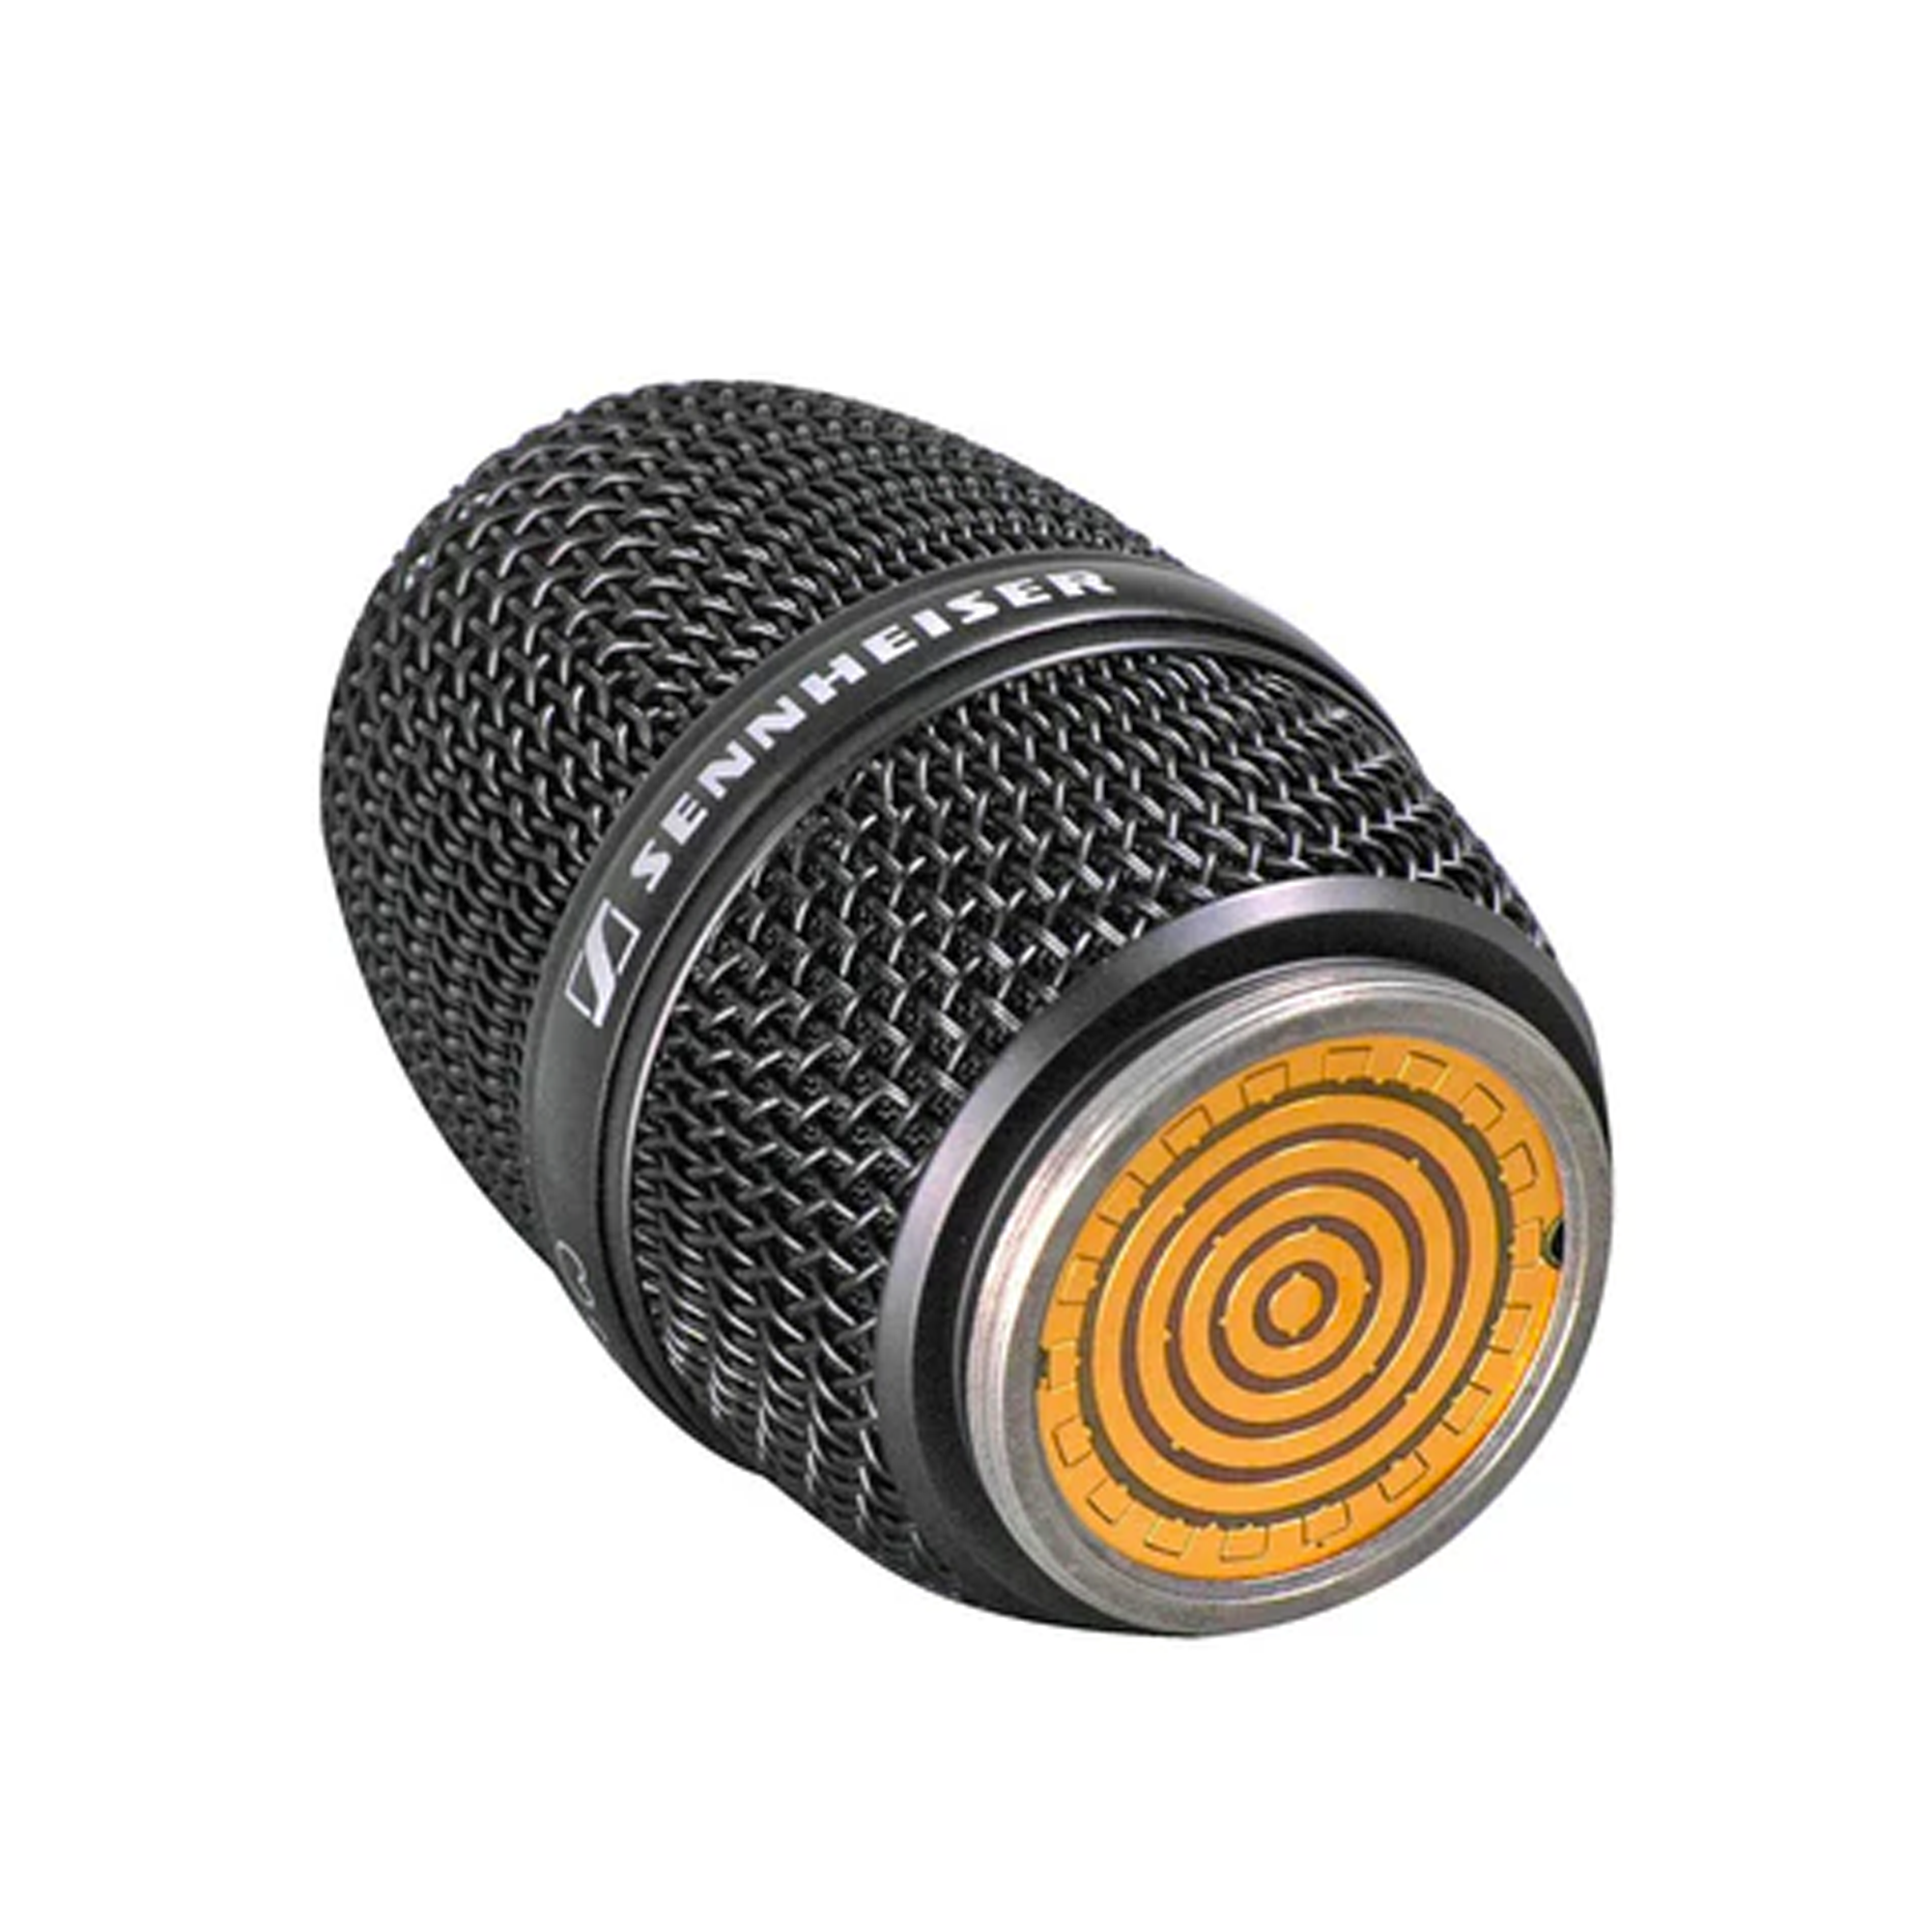 Sennheiser MME 865-1 BK Condenser Super Cardioid Microphone Module, Black